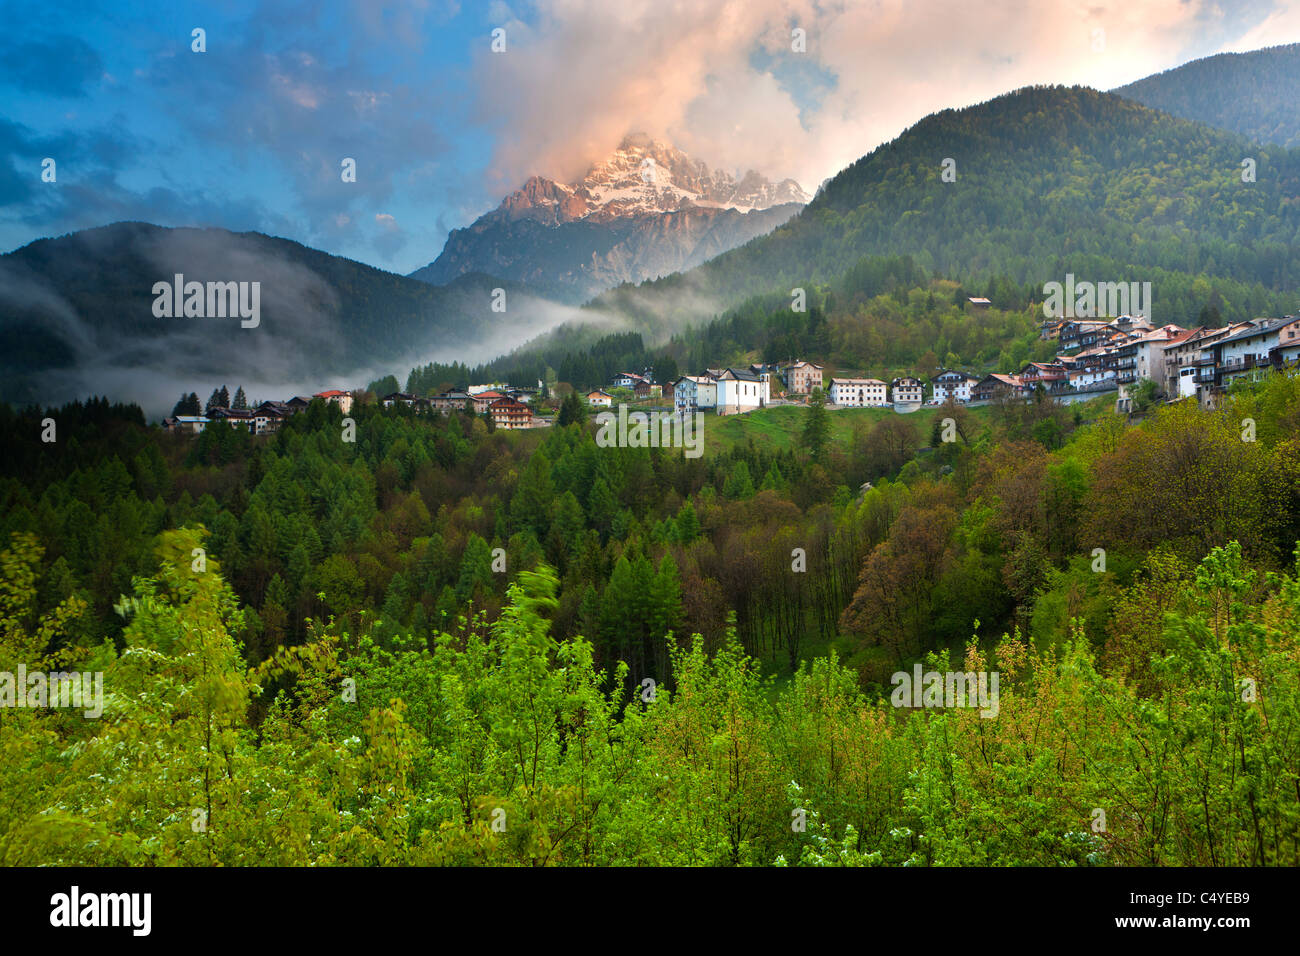 Valle Di Cadore und Monte Antelao im Hintergrund, Vento, Dolomiten, Italien, Europa Stockfoto